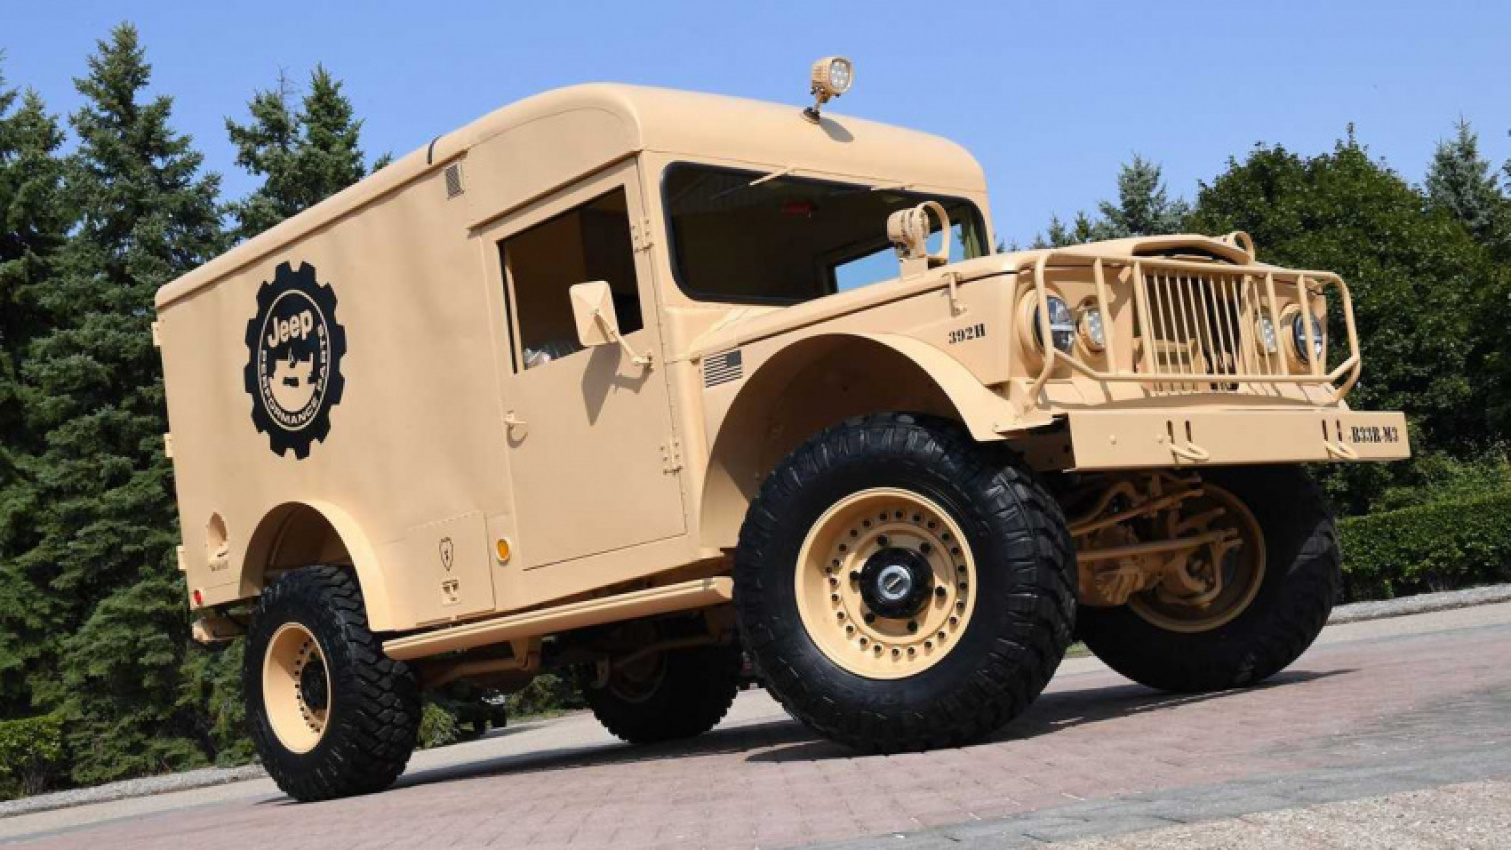 autos, cars, jeep, 2022 easter jeep safari debuts seven concepts, including one named bob